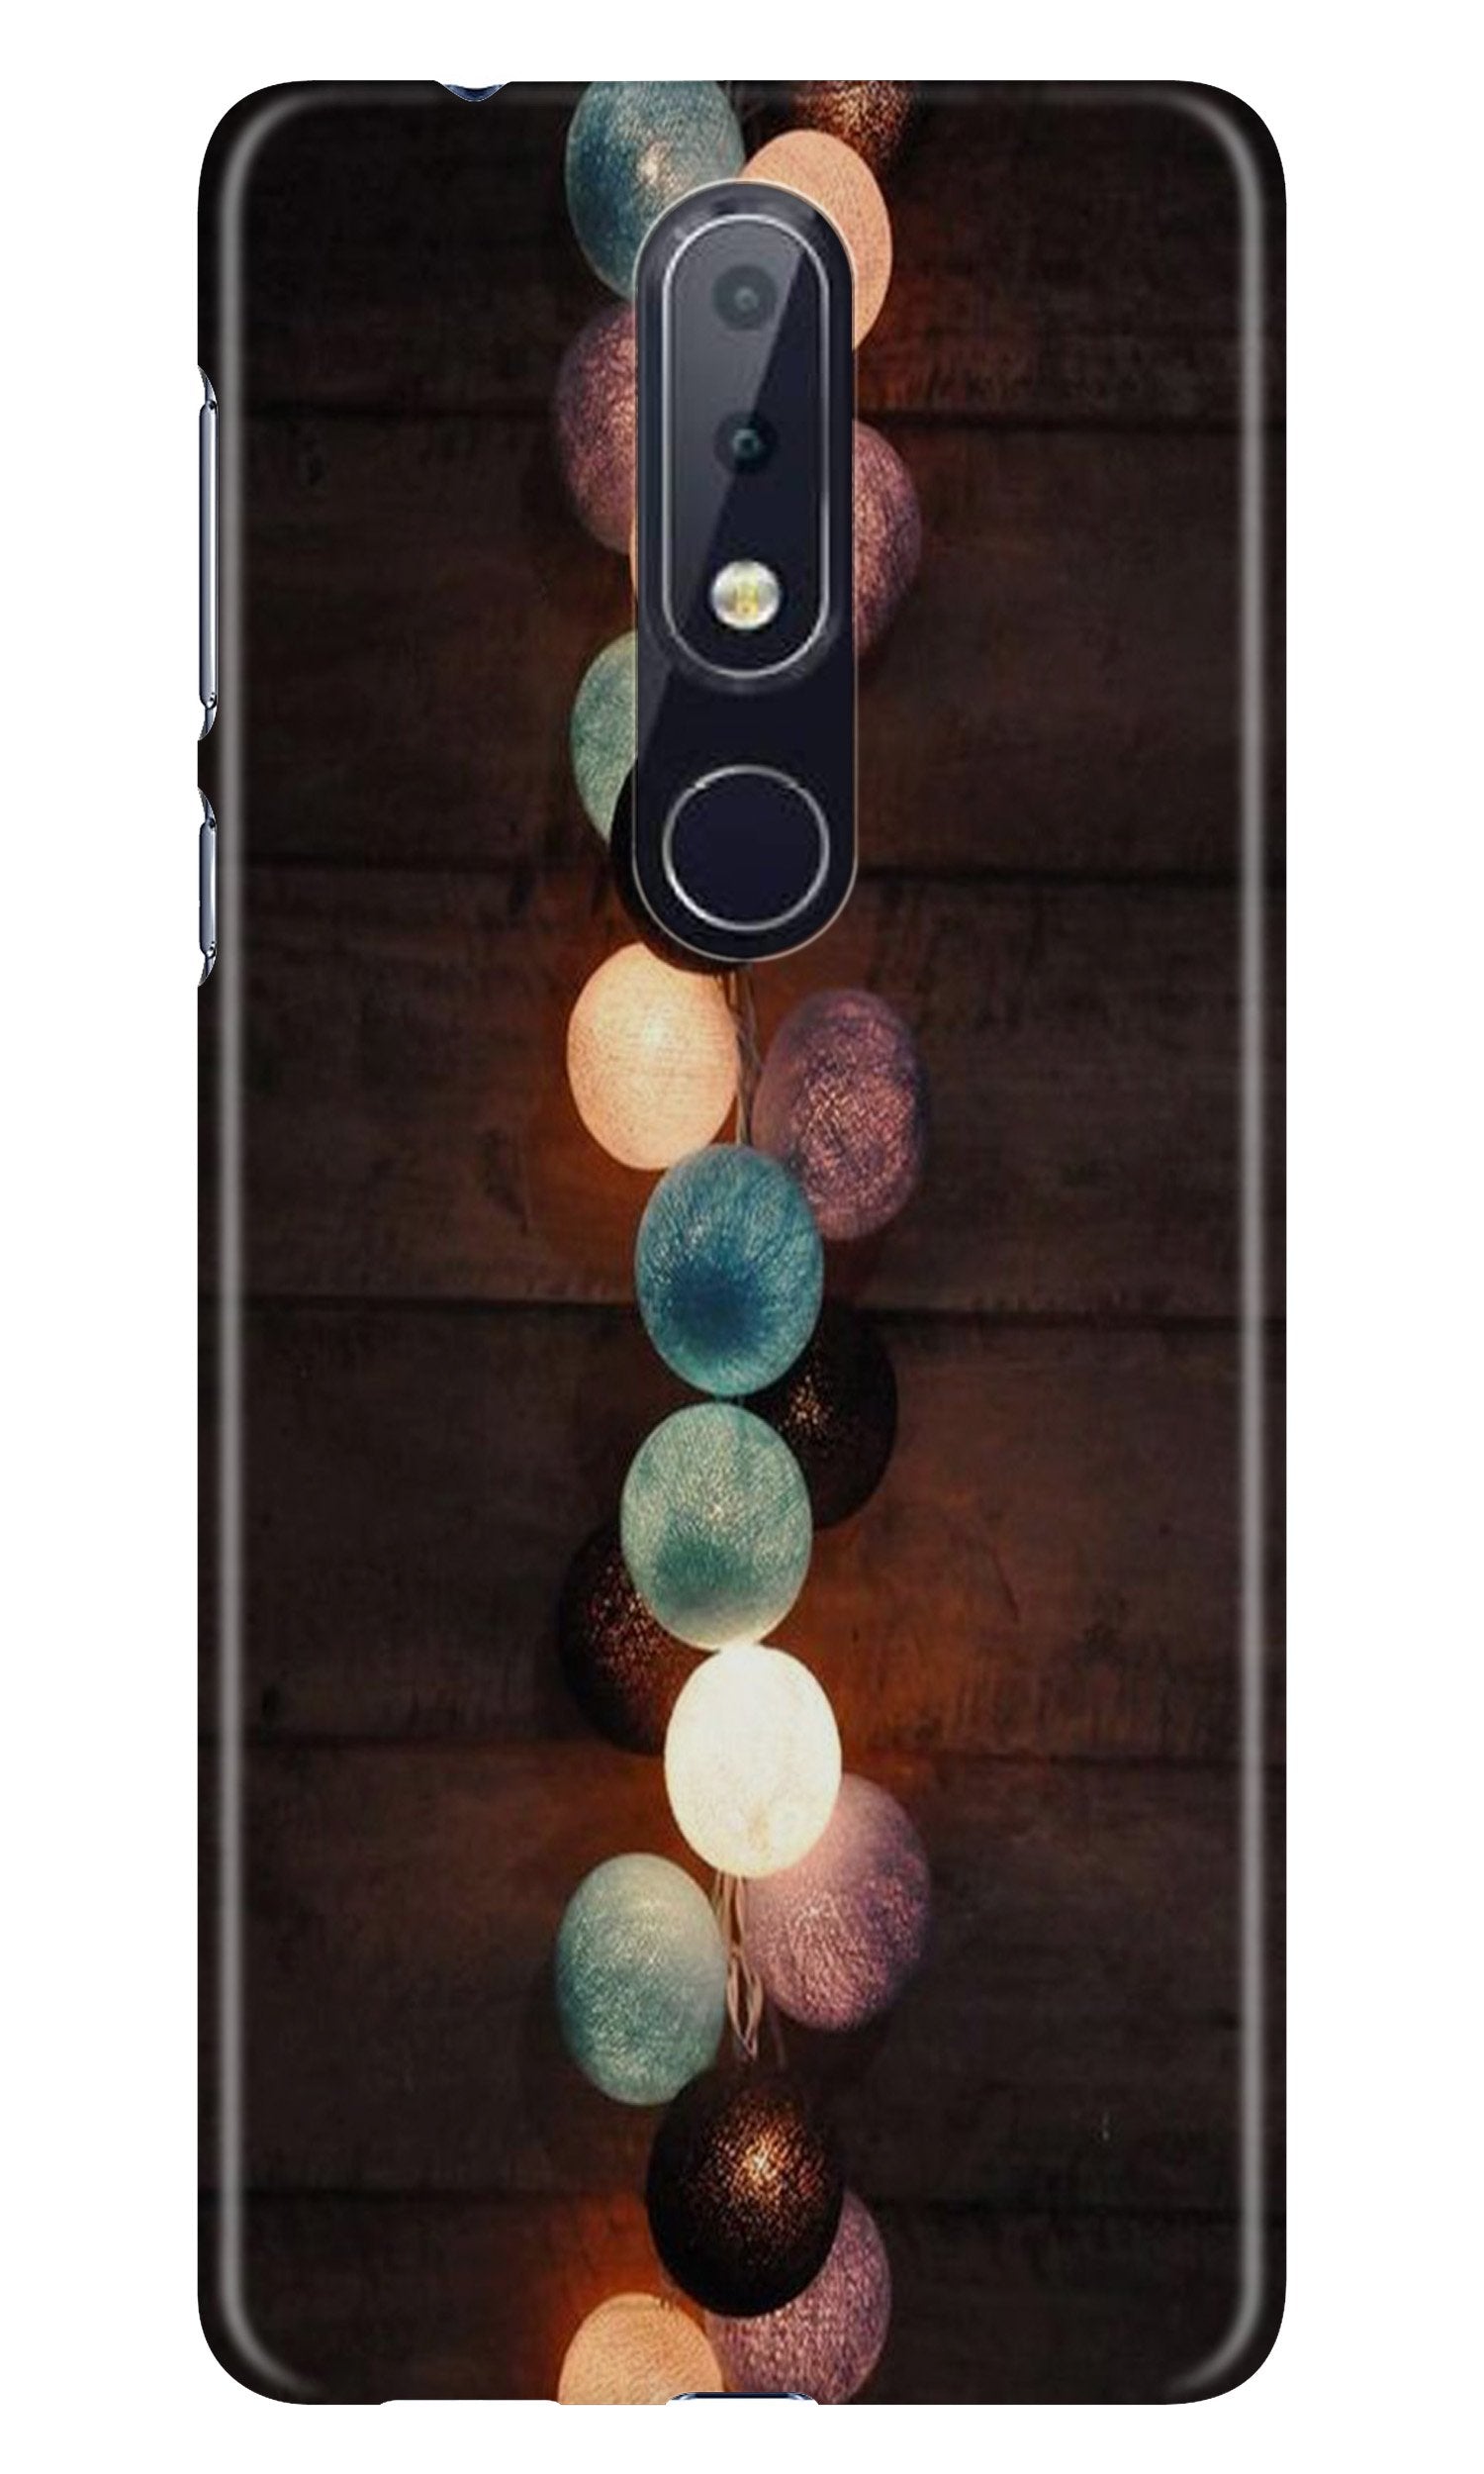 Party Lights Case for Nokia 6.1 Plus (Design No. 209)